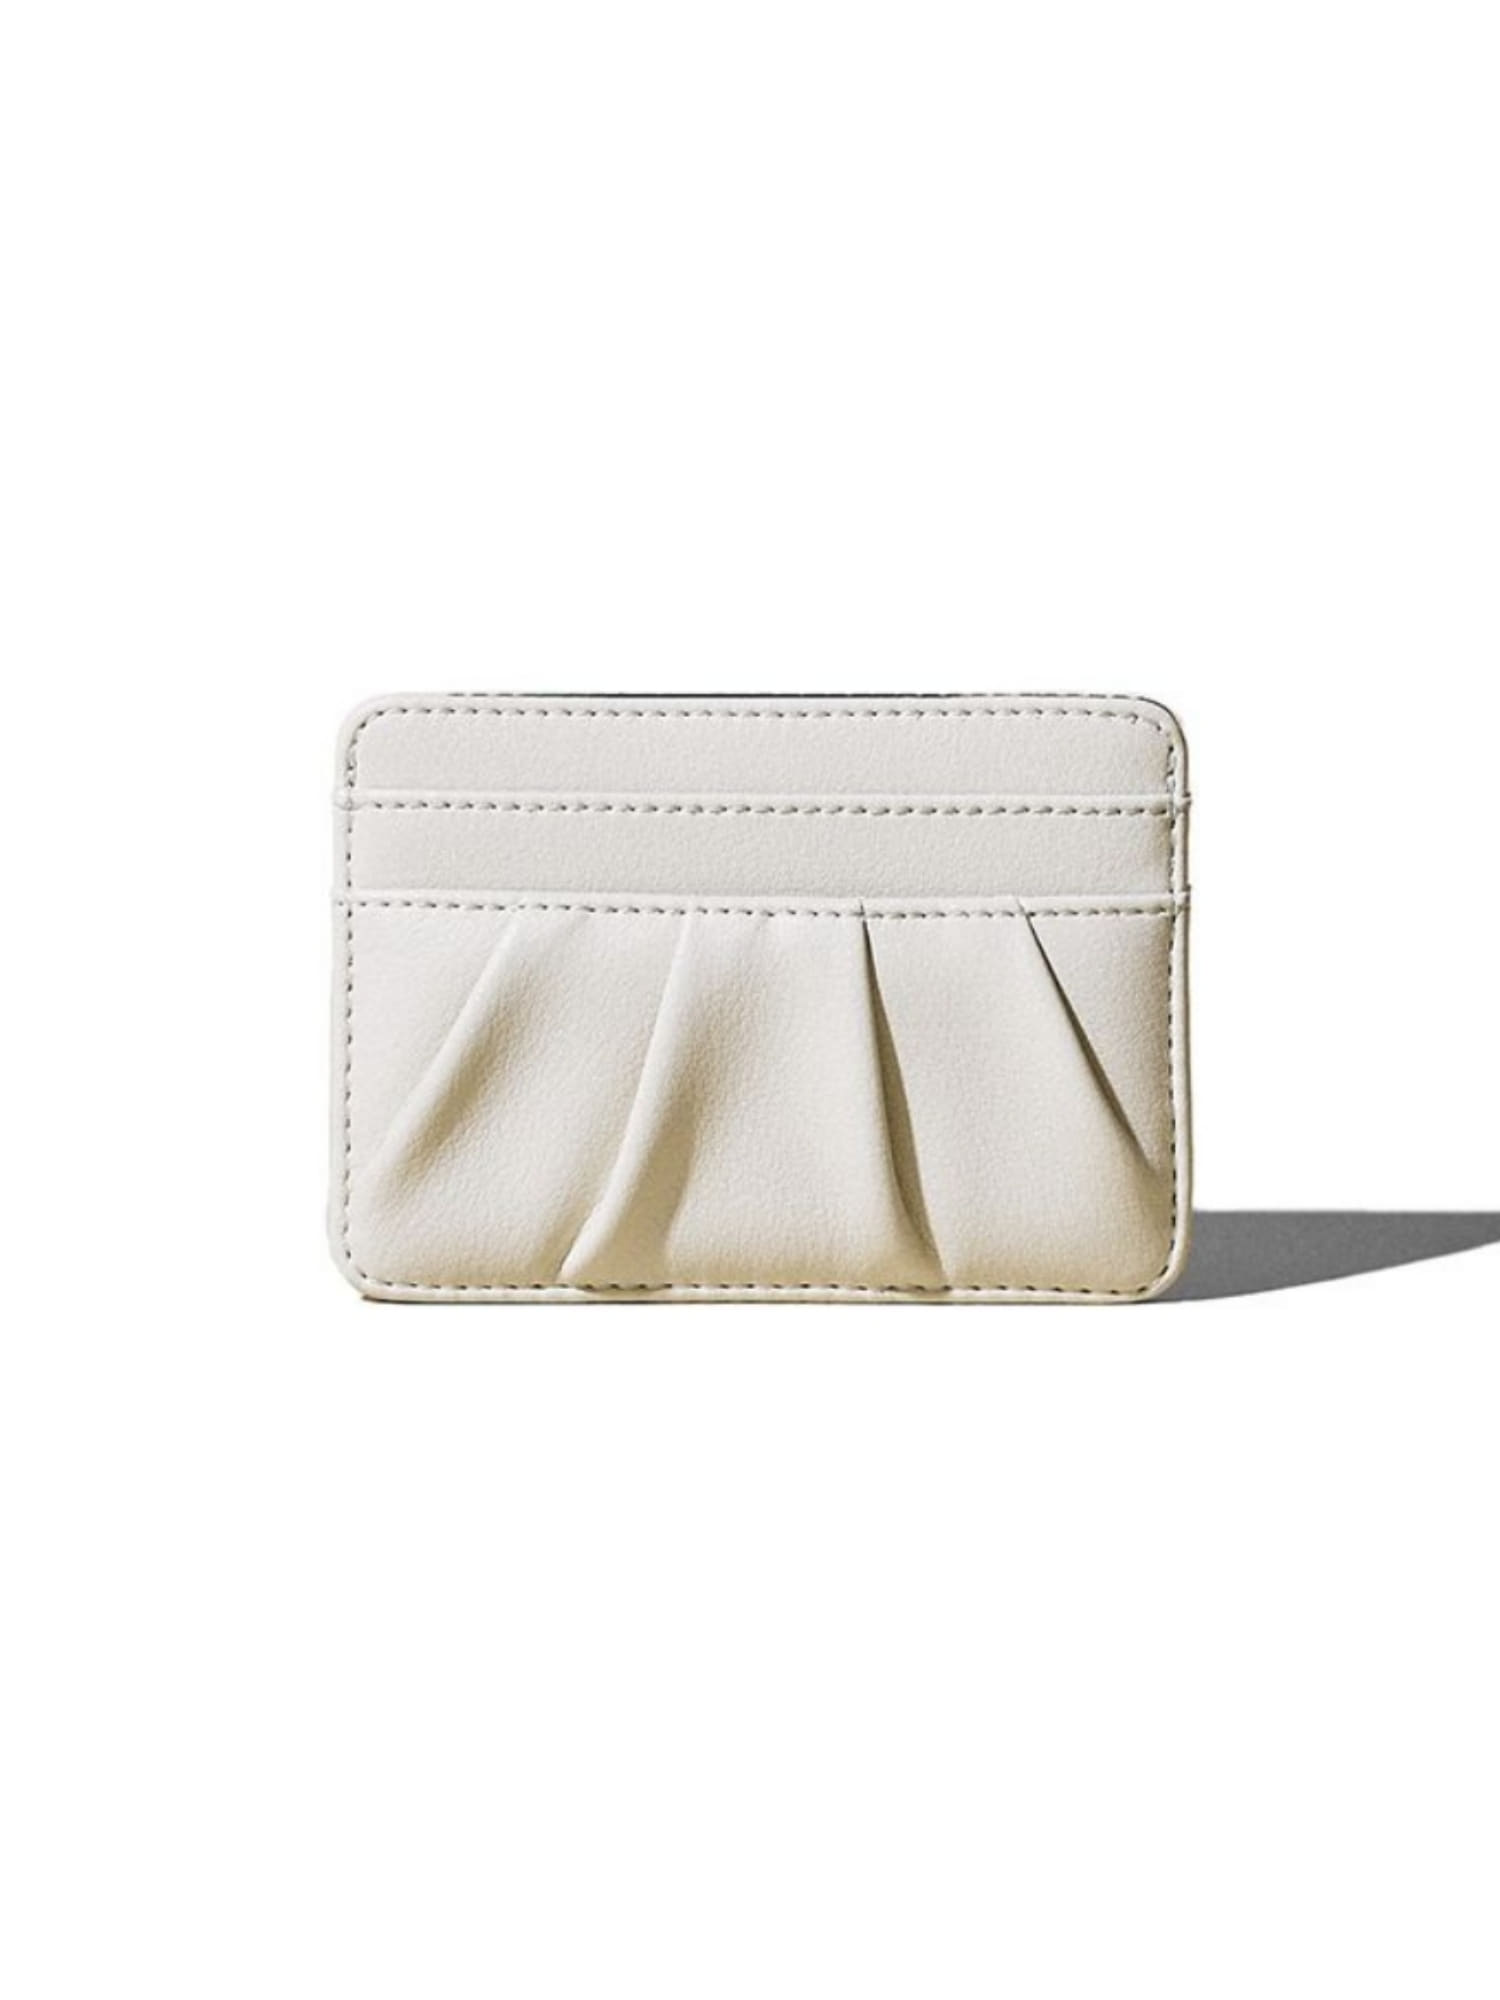 DOUGH Flat Card Holder Wallets - Cream White